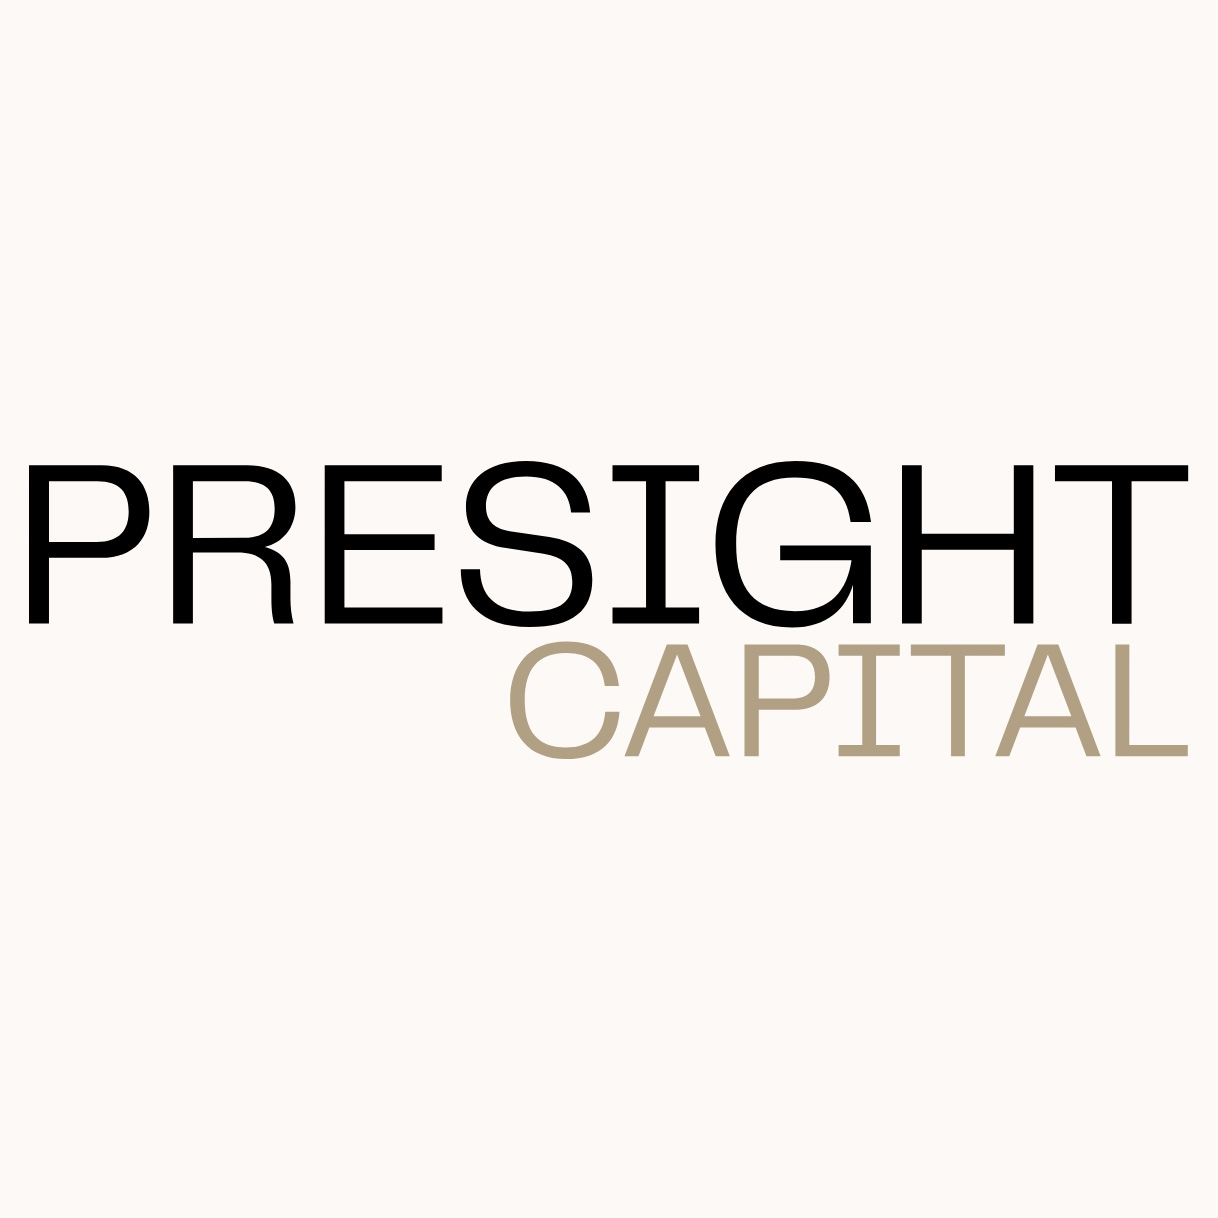 Presight Capital